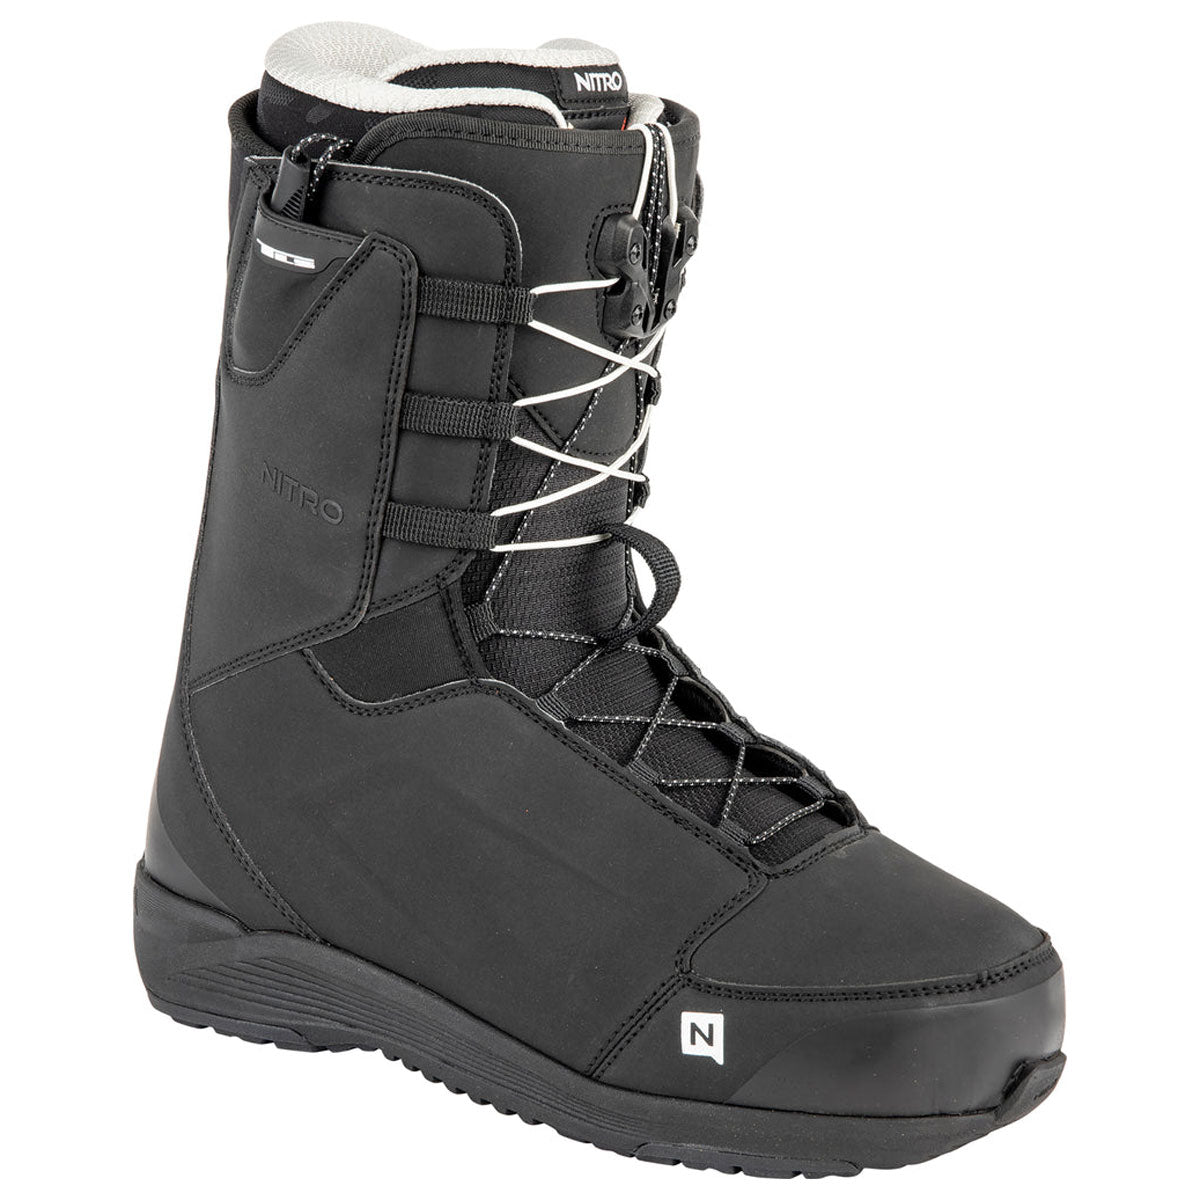 Nitro Anthem Tls 2024 Snowboard Boots - Black image 1